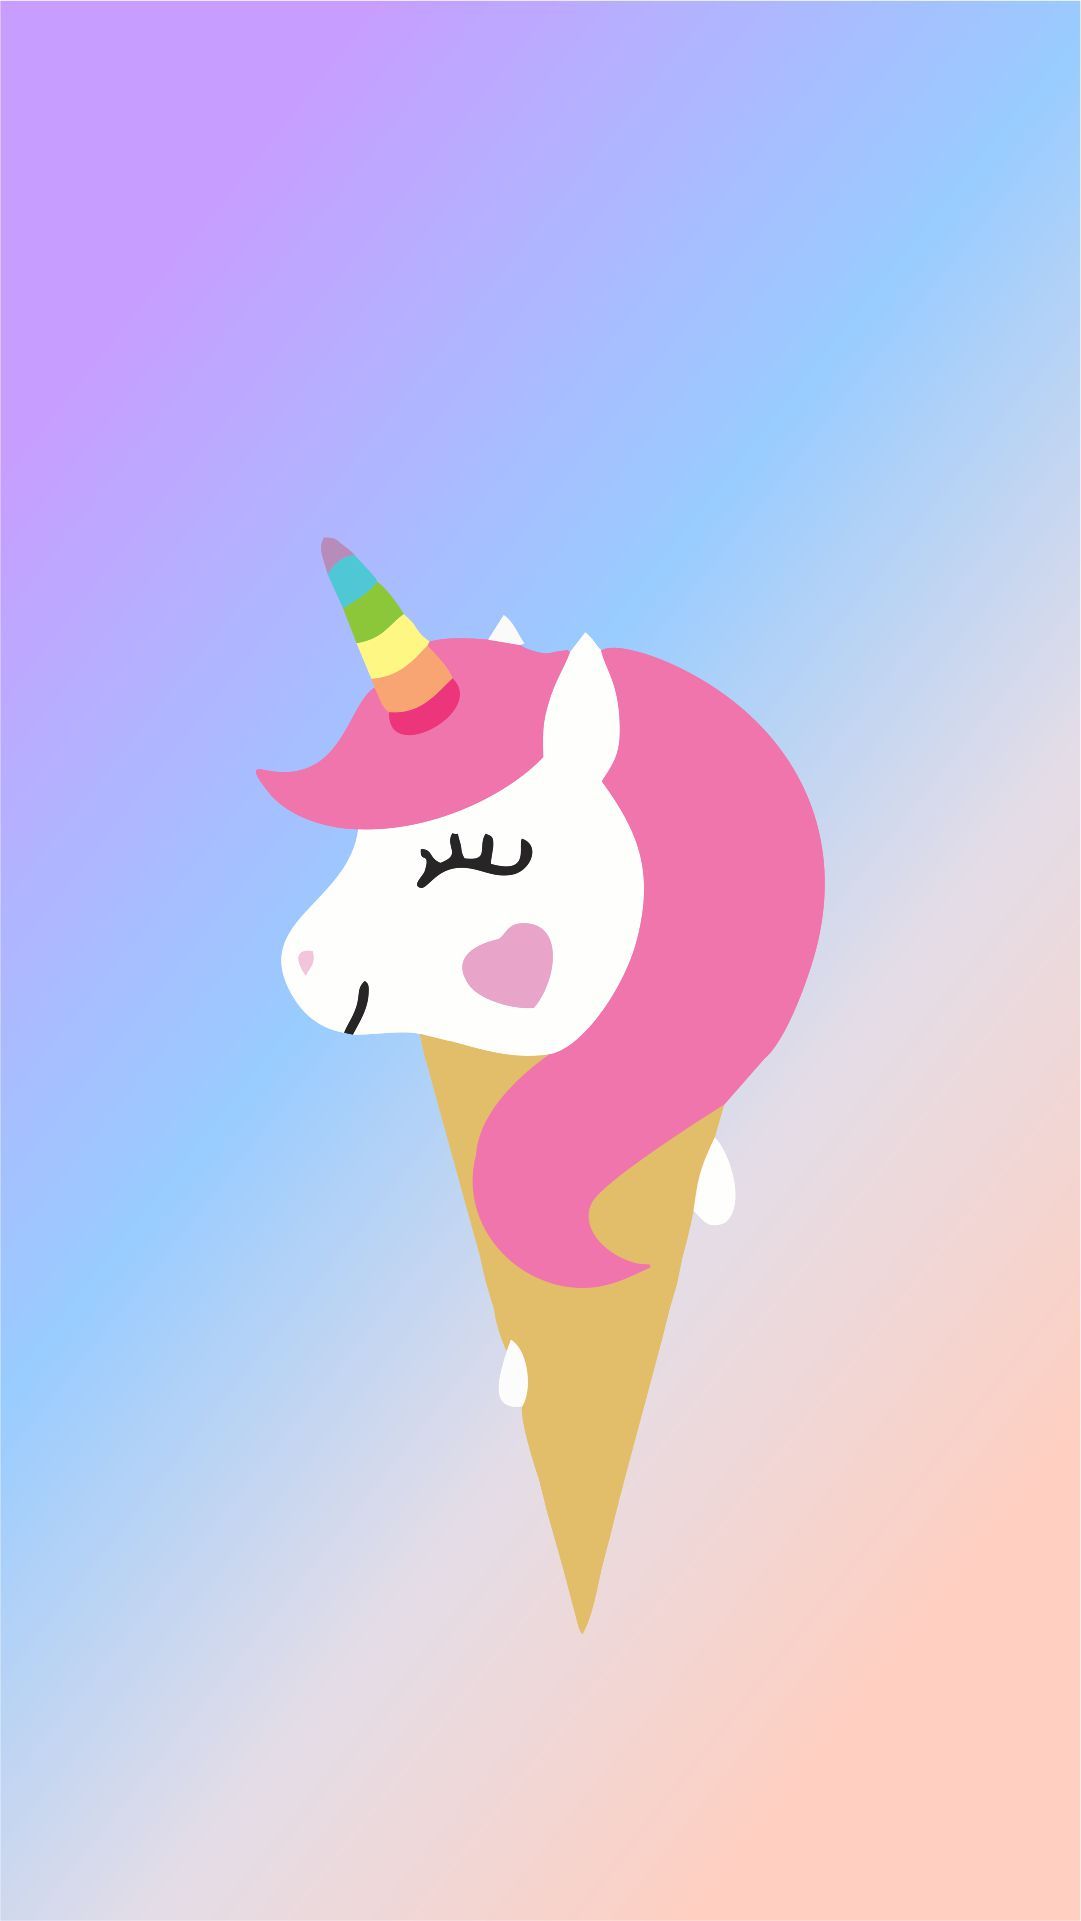 wallpaper hp android terbagus,unicorn,ice cream cone,ice cream,frozen dessert,cartoon